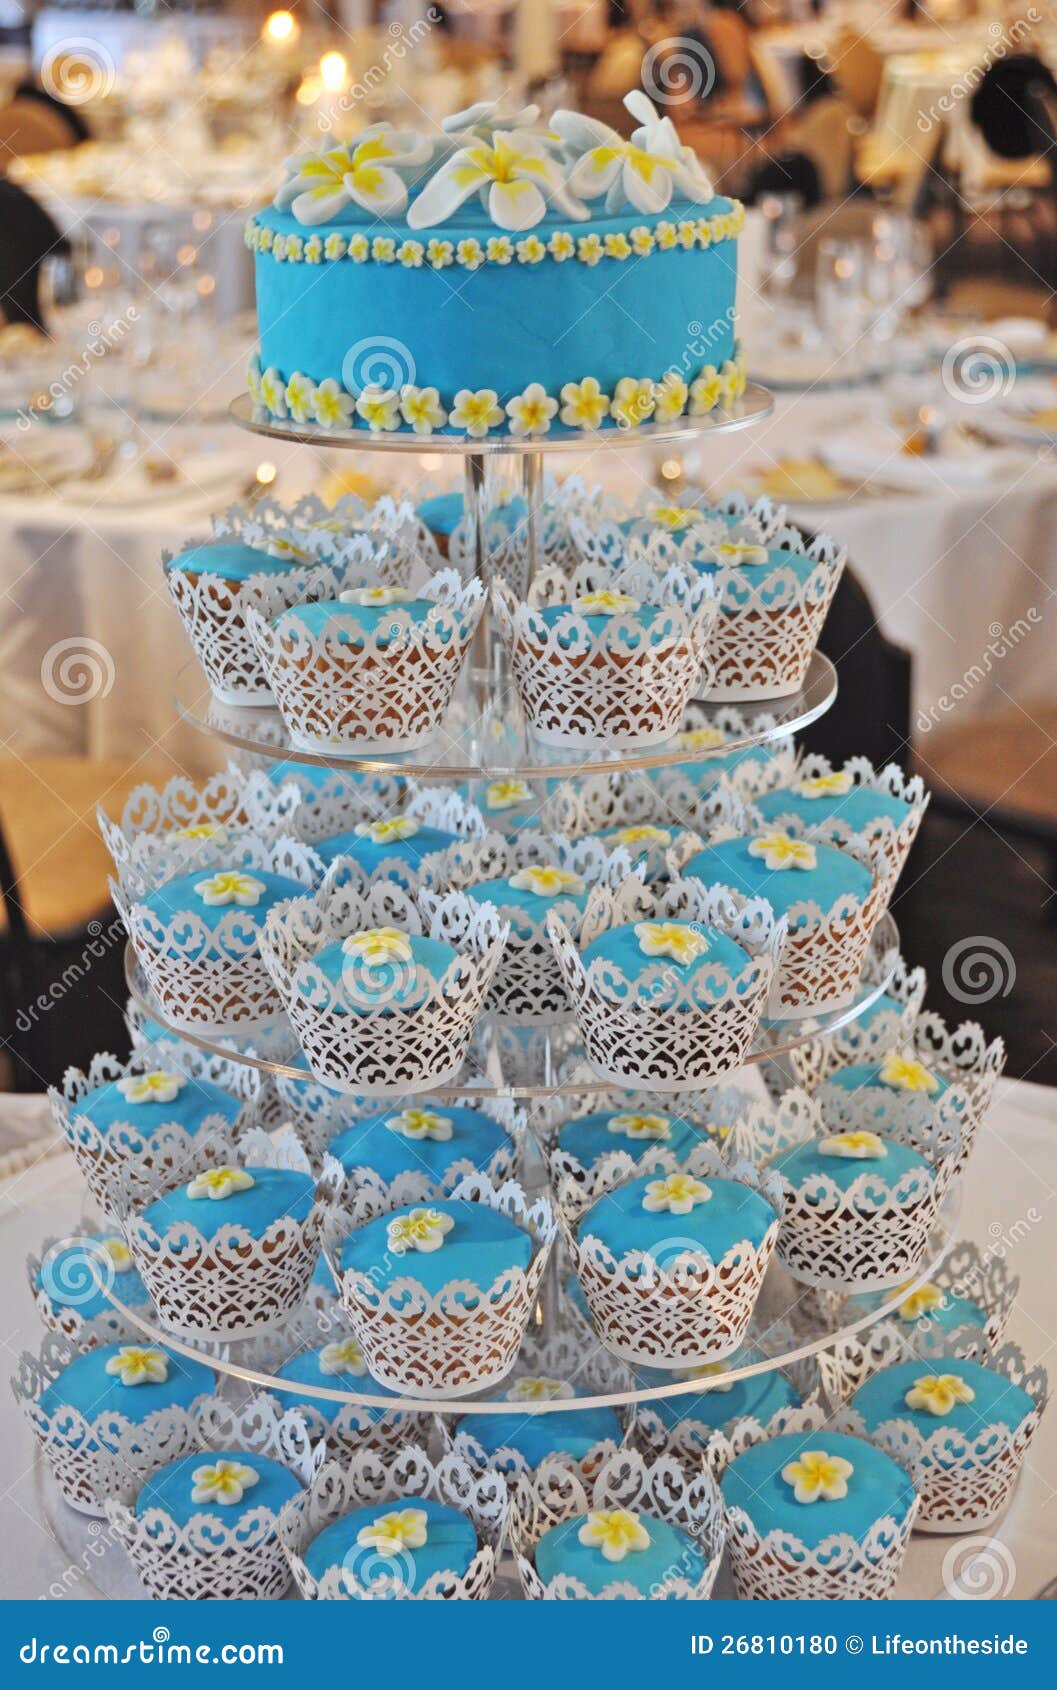 Vegan Wedding Cupcake Tower with vegan cupcakes